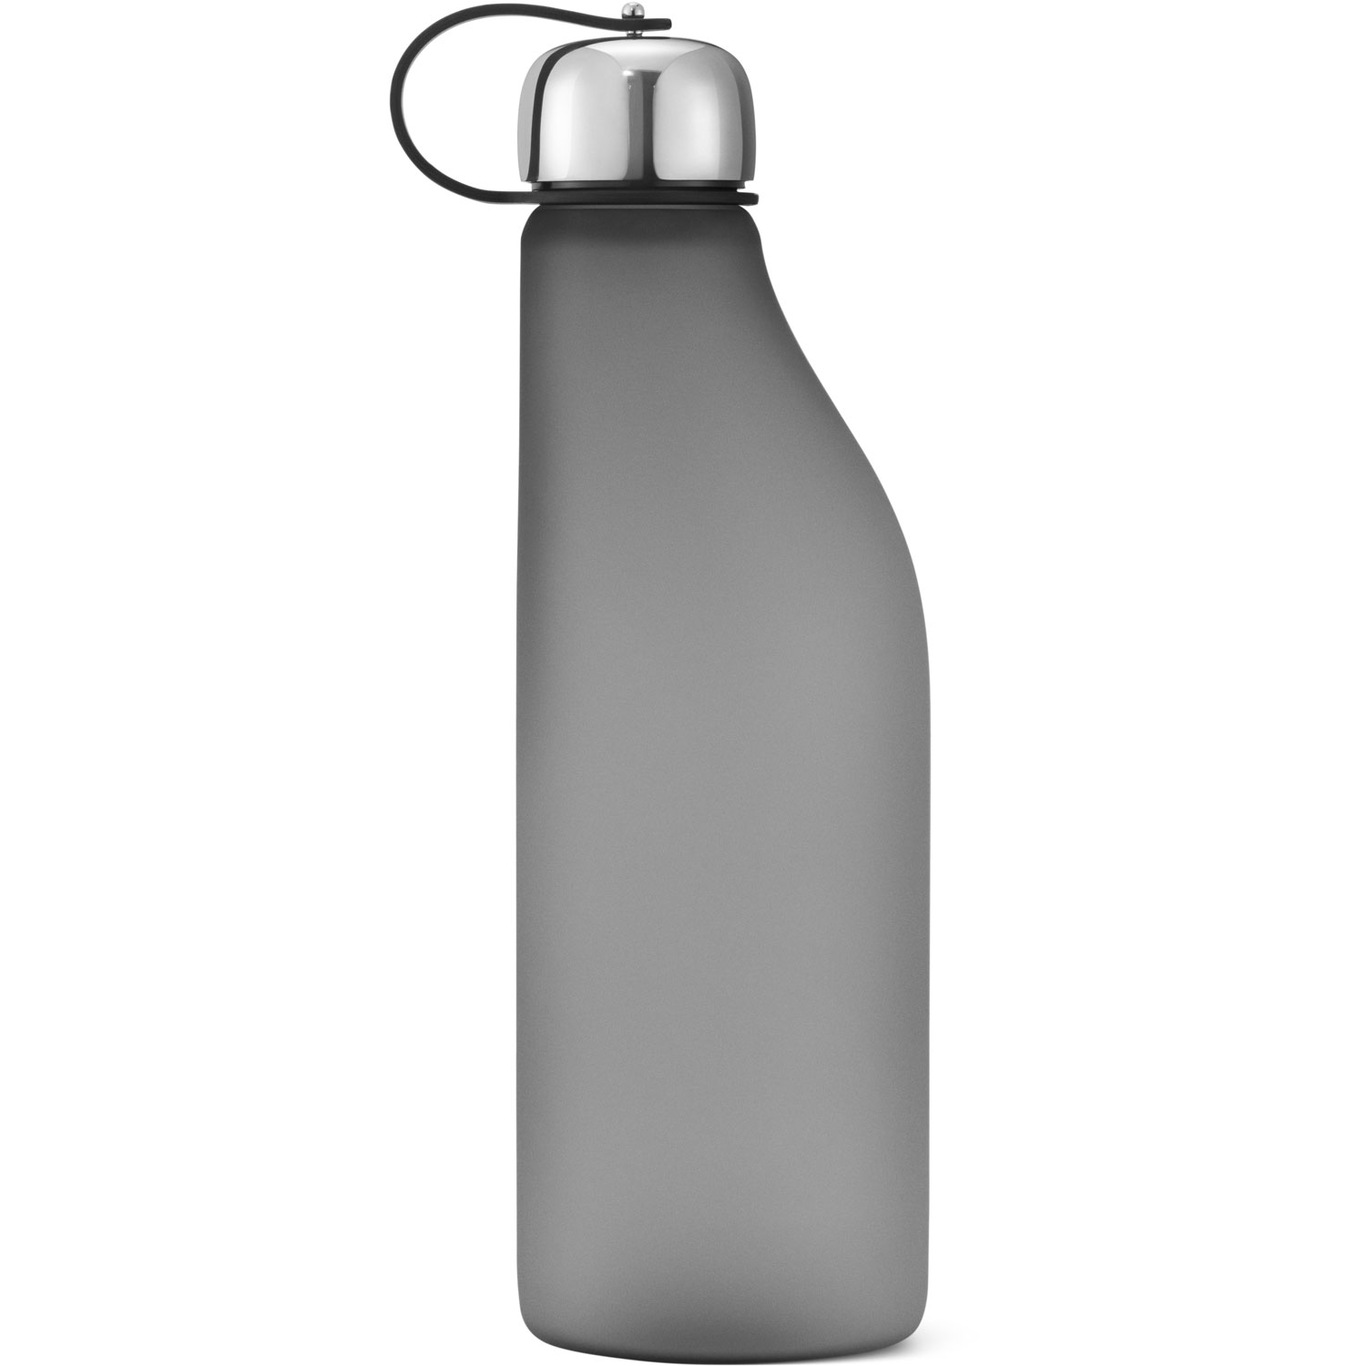 Sky Drinking Bottle Grey Stainless Steel & Plastic